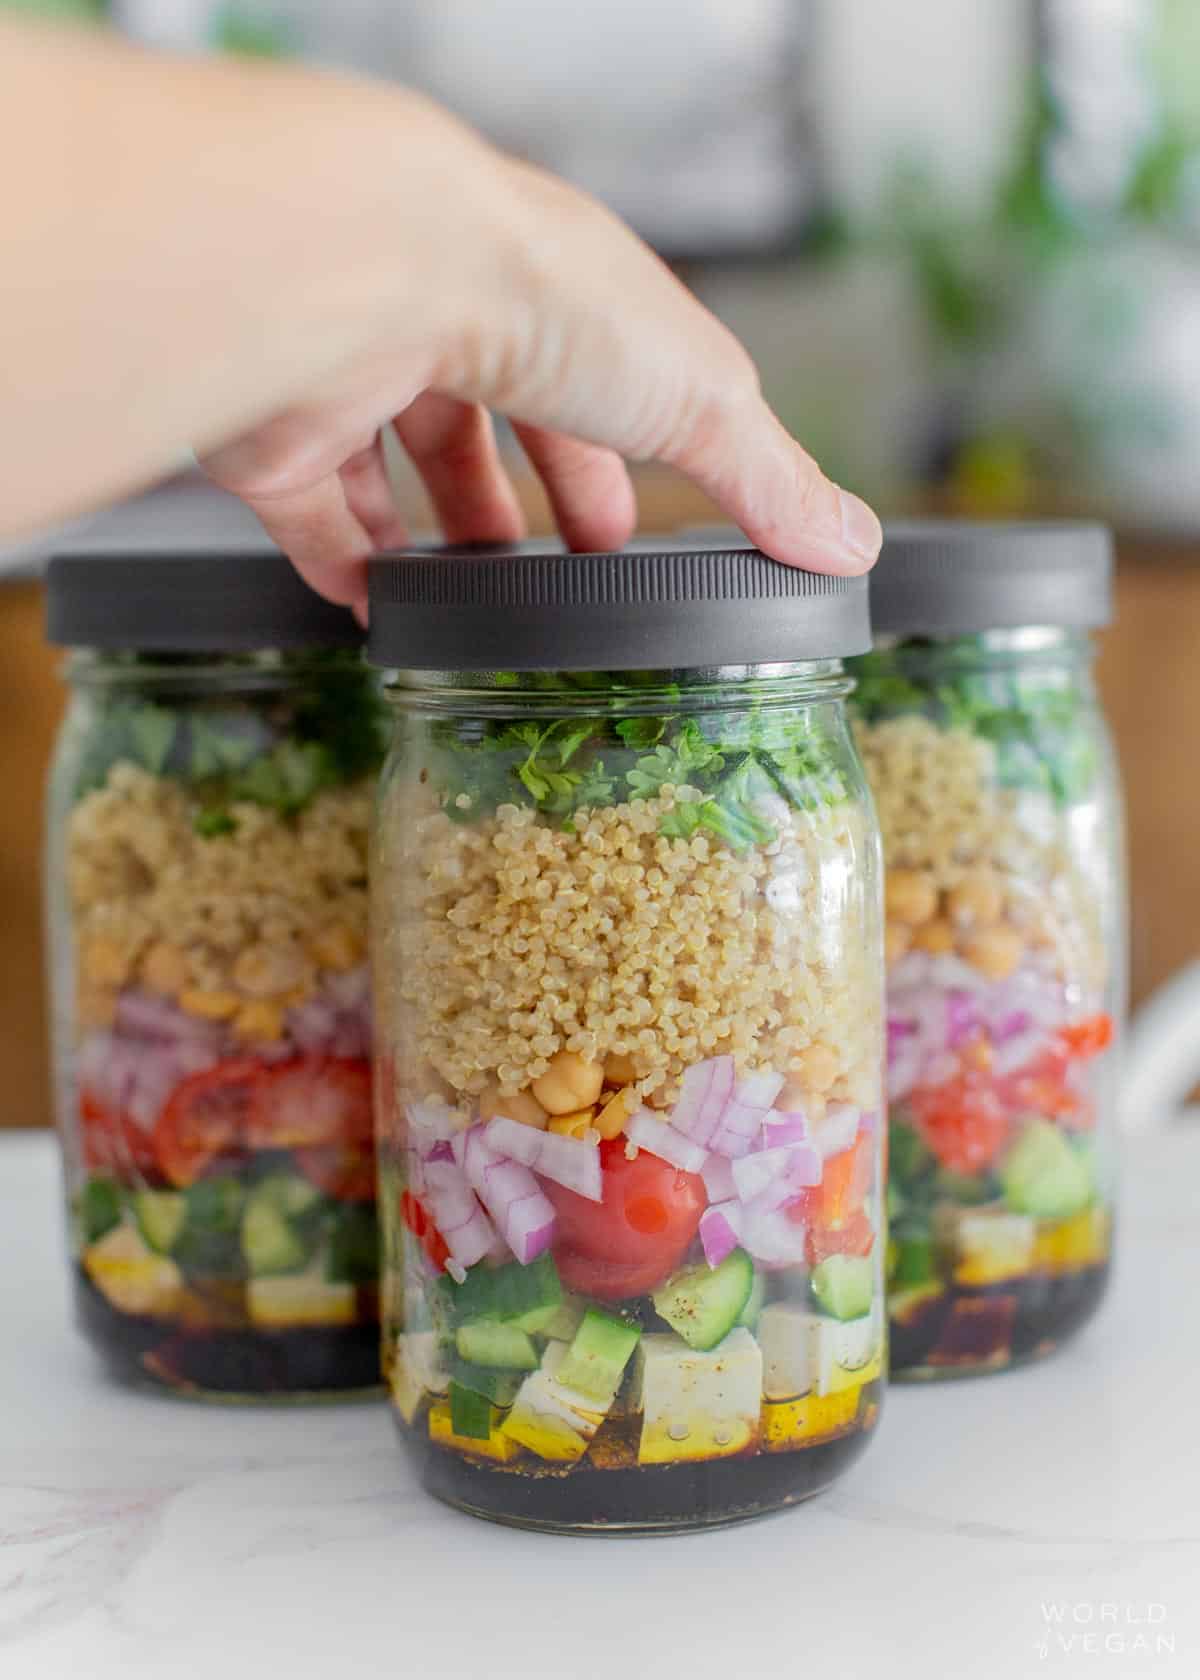 A hand reaching for a jar of vegan quinoa salad.